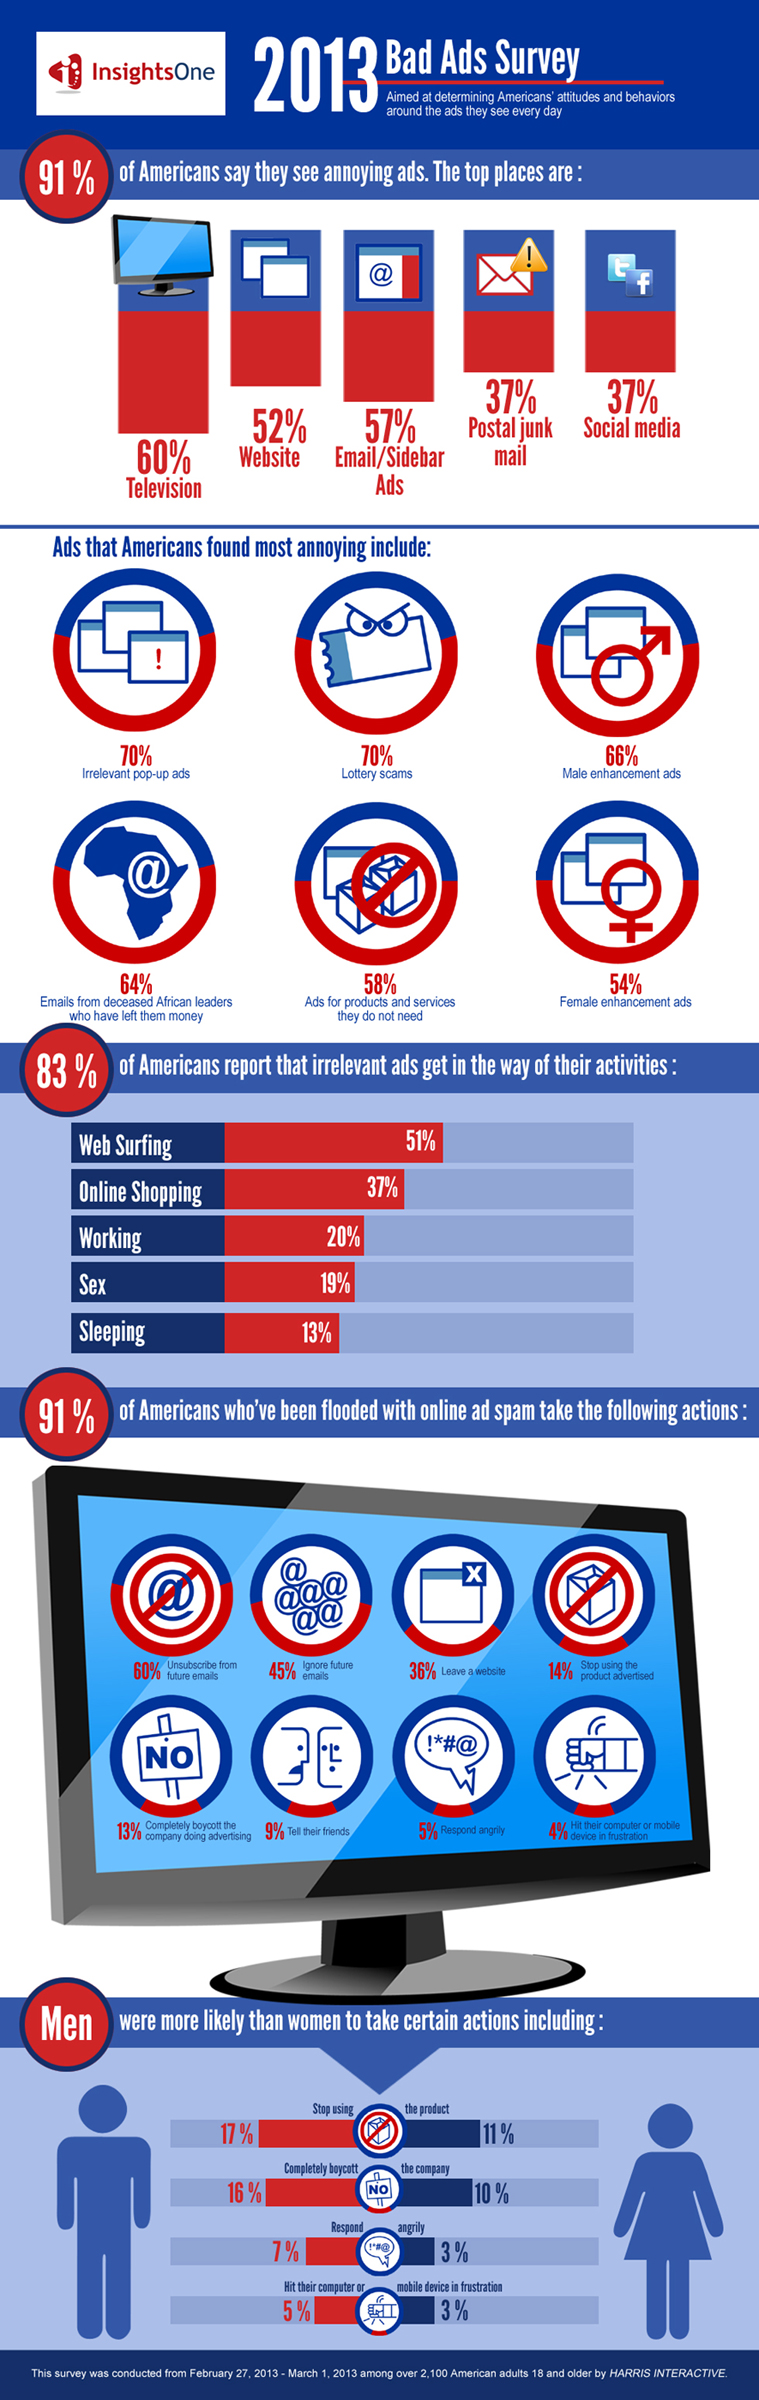 bad-ad-survey-infographic